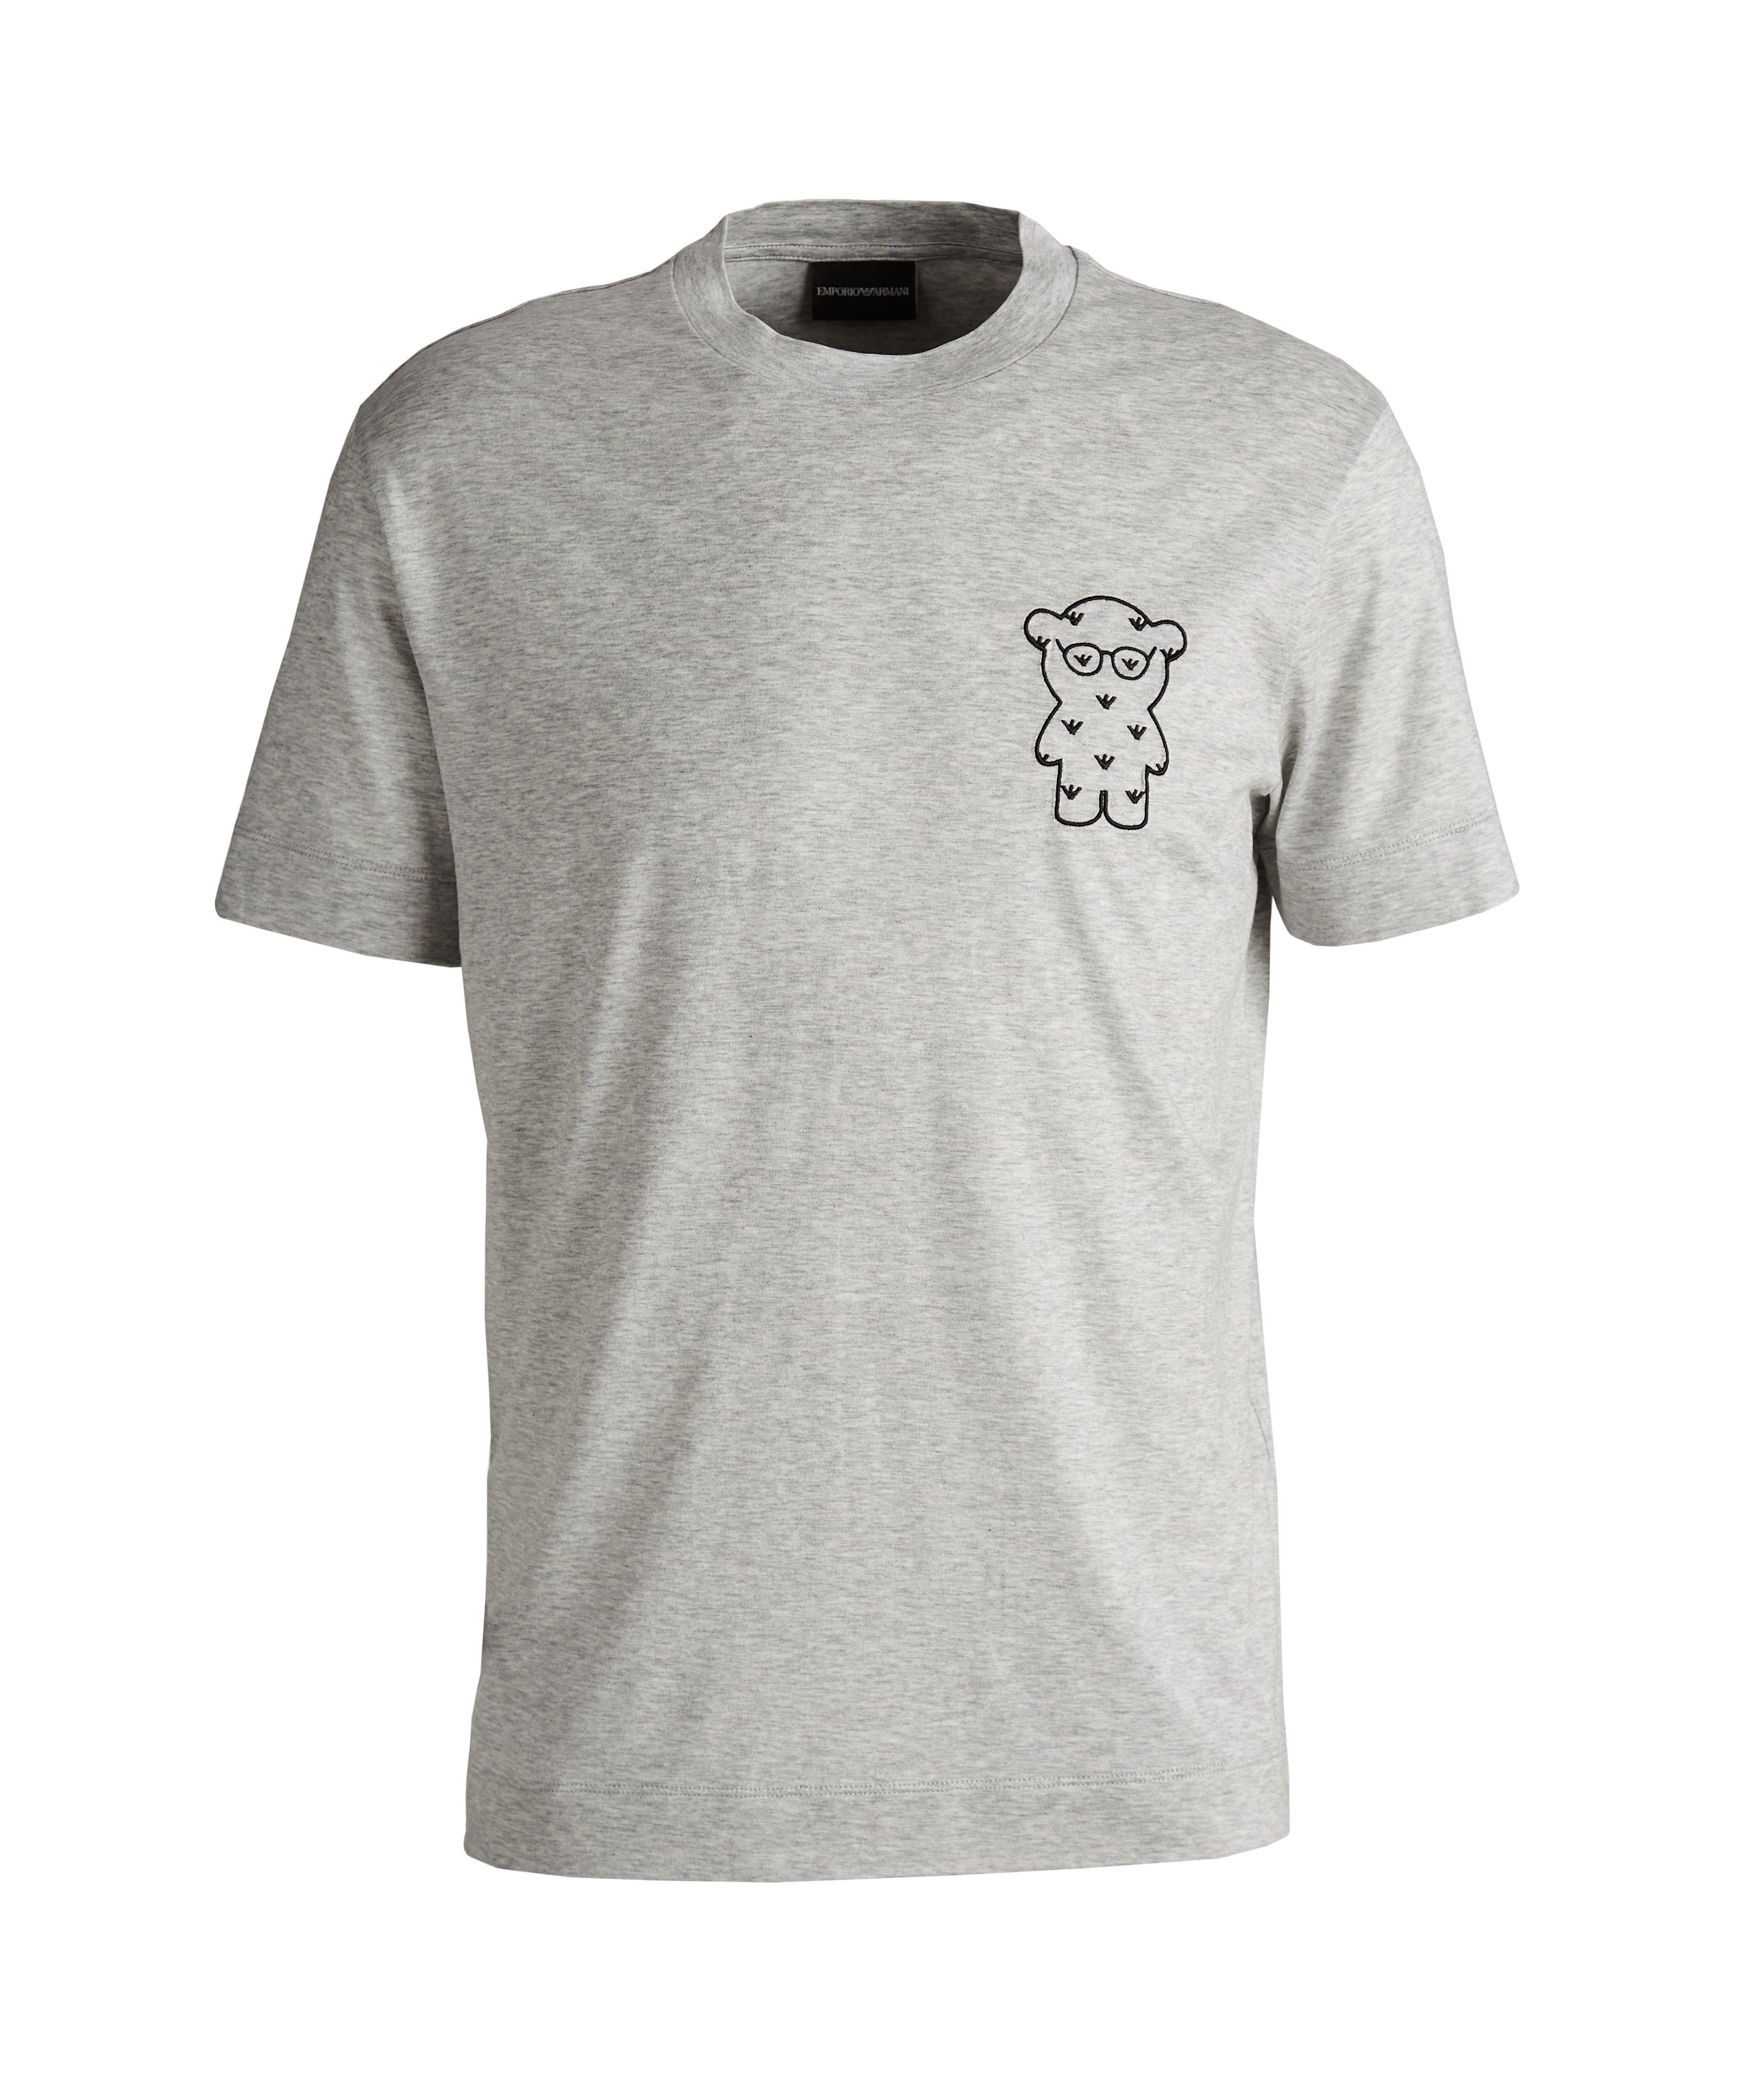 T-shirt en lyocell et coton, collection Manga Bear image 0